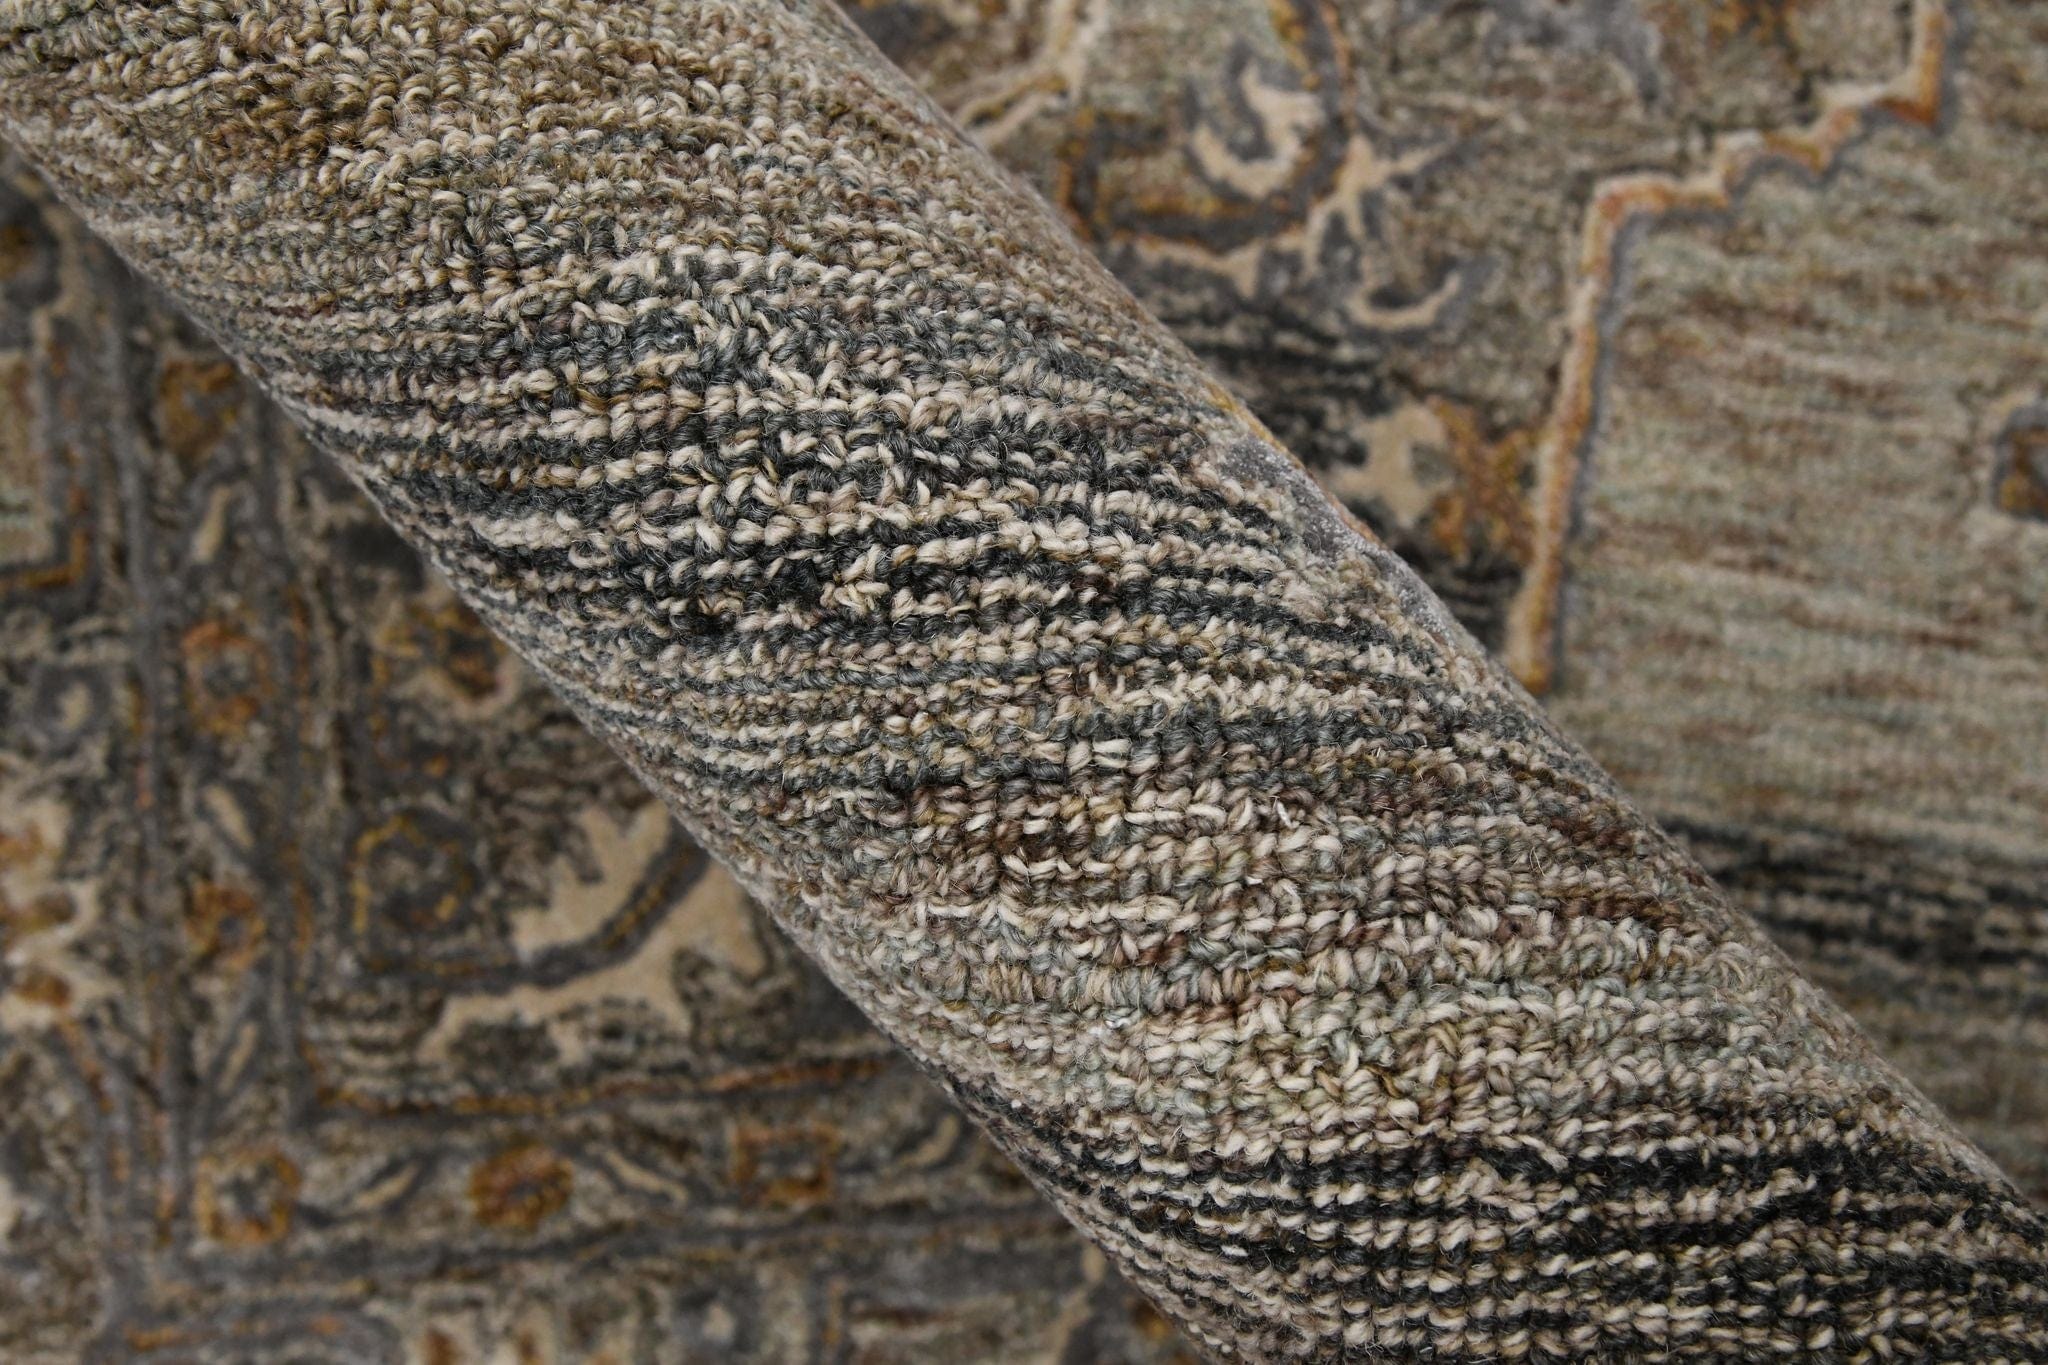 Camel Wool & Viscose Vestige 8X10 Feet  Hand-Tufted Carpet - Rug